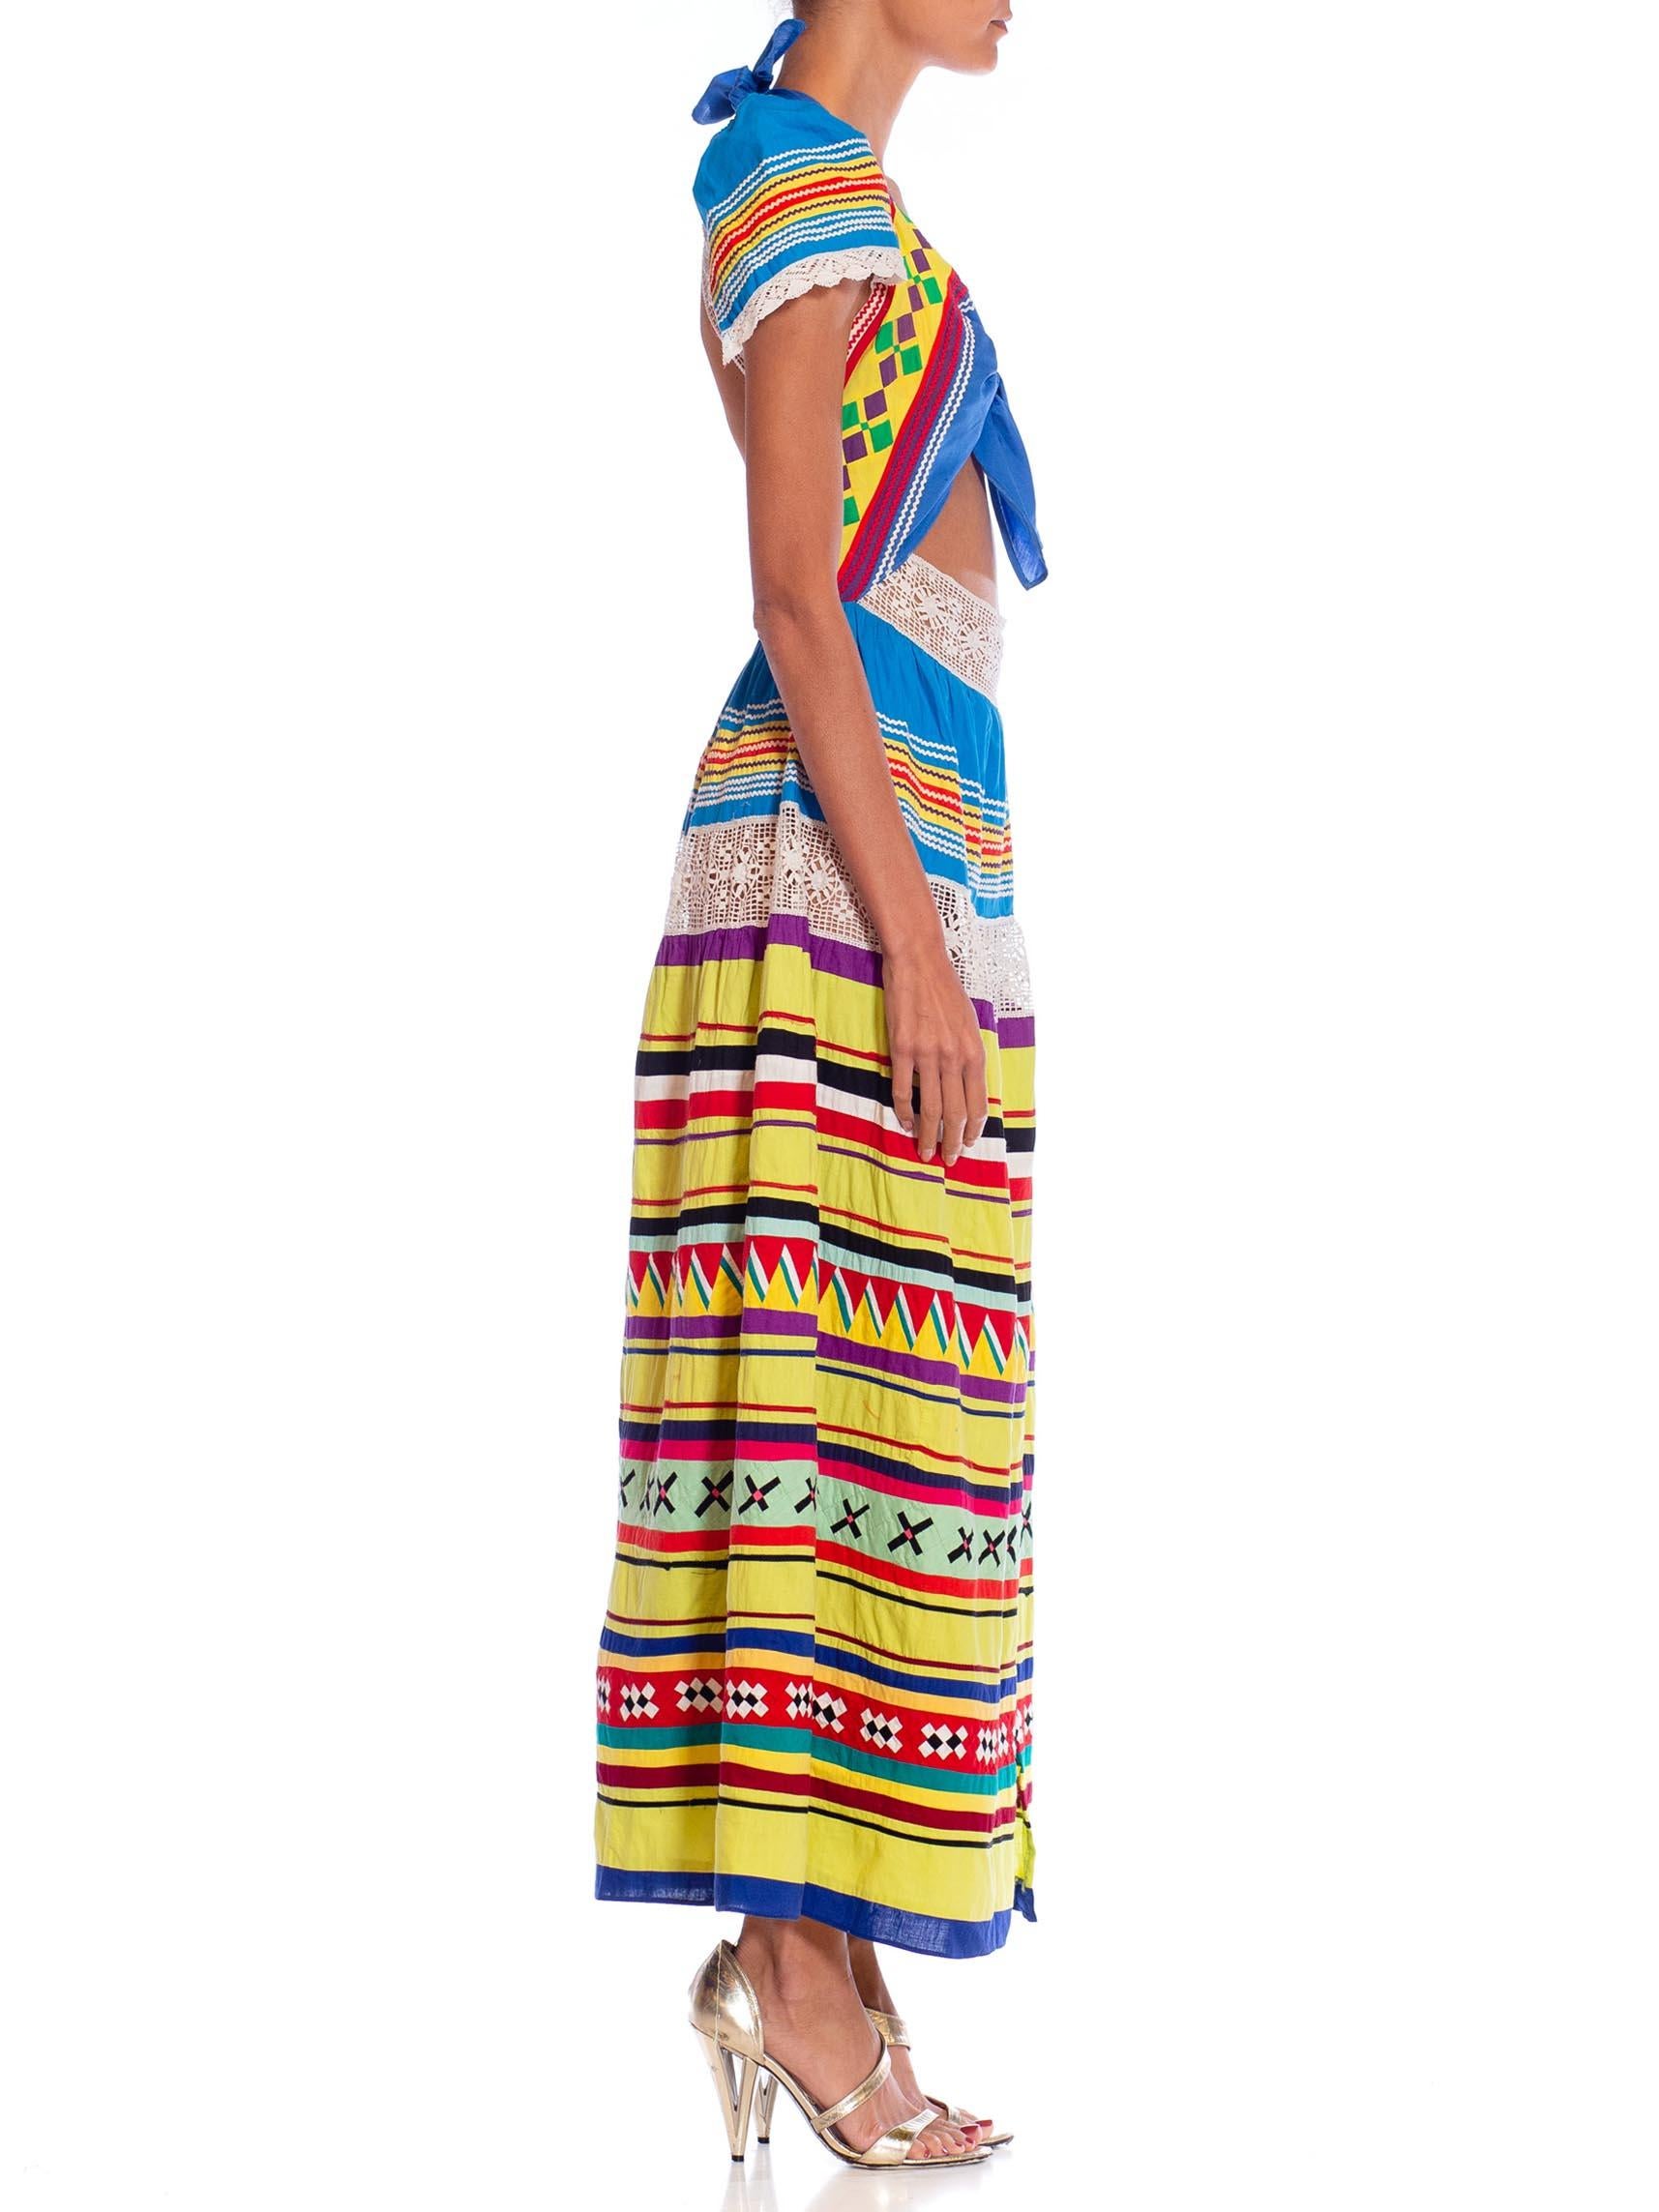 seminole dress